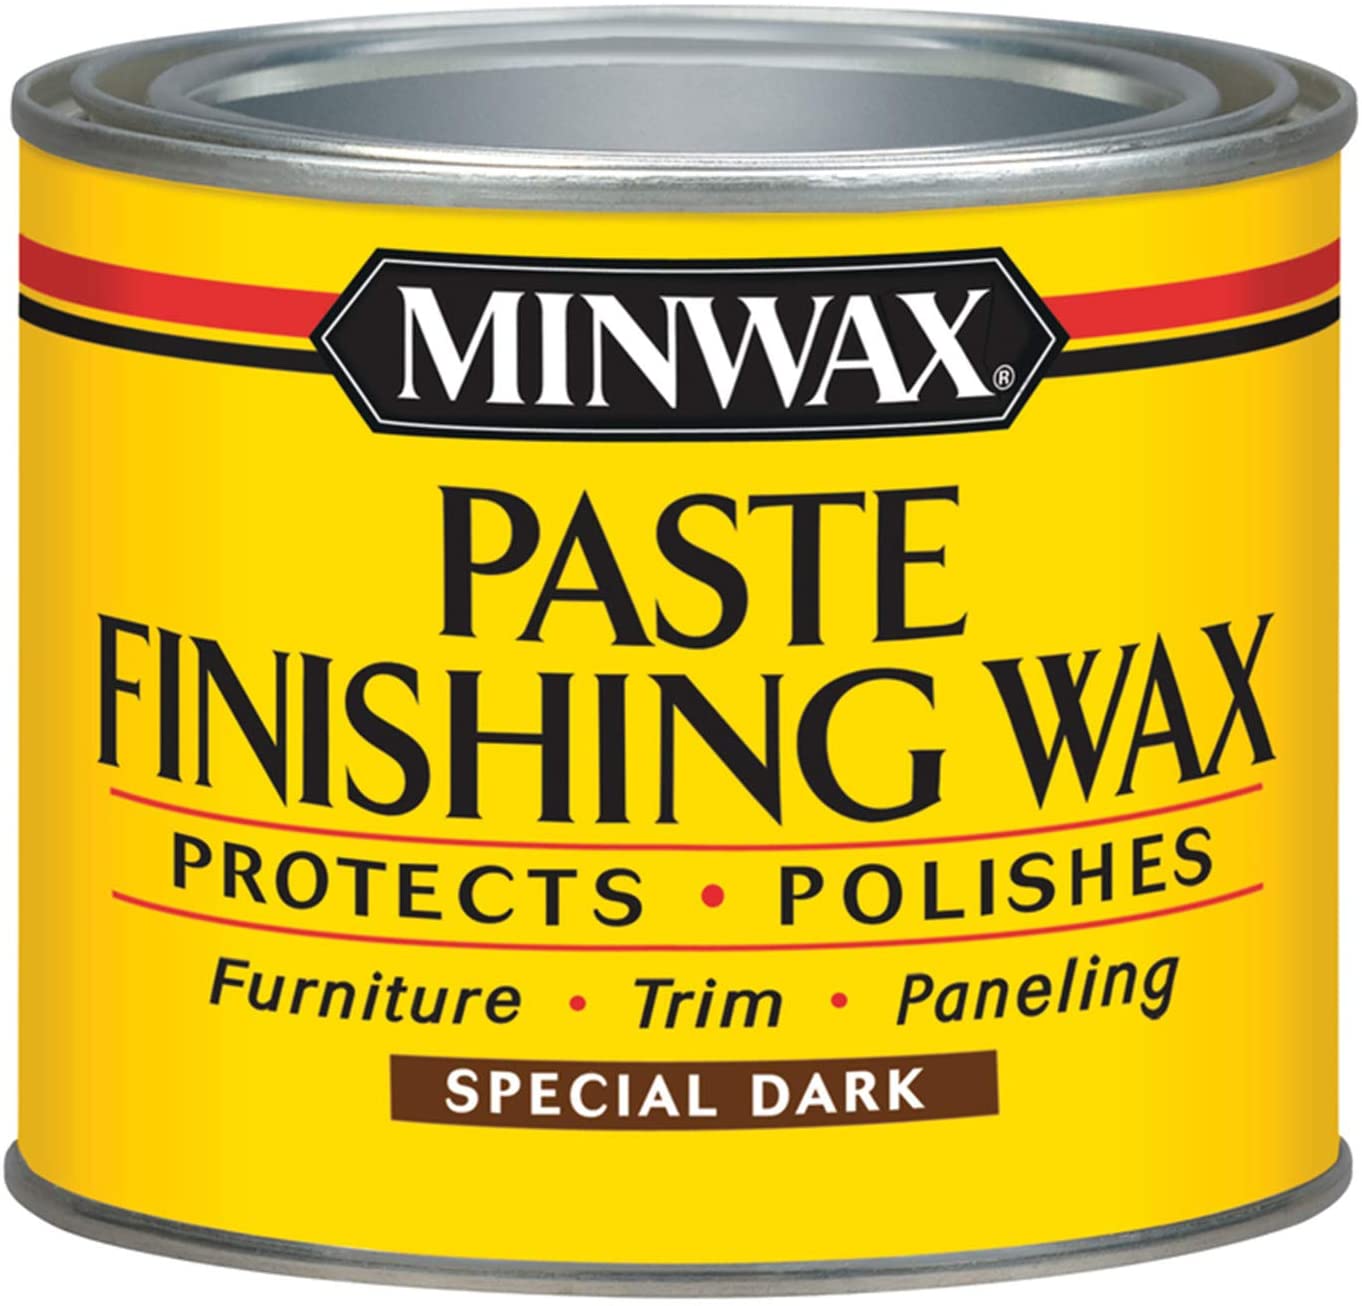 Minwax Paste Finishing Wax, Special Dark, 1 lb - image 3 of 4